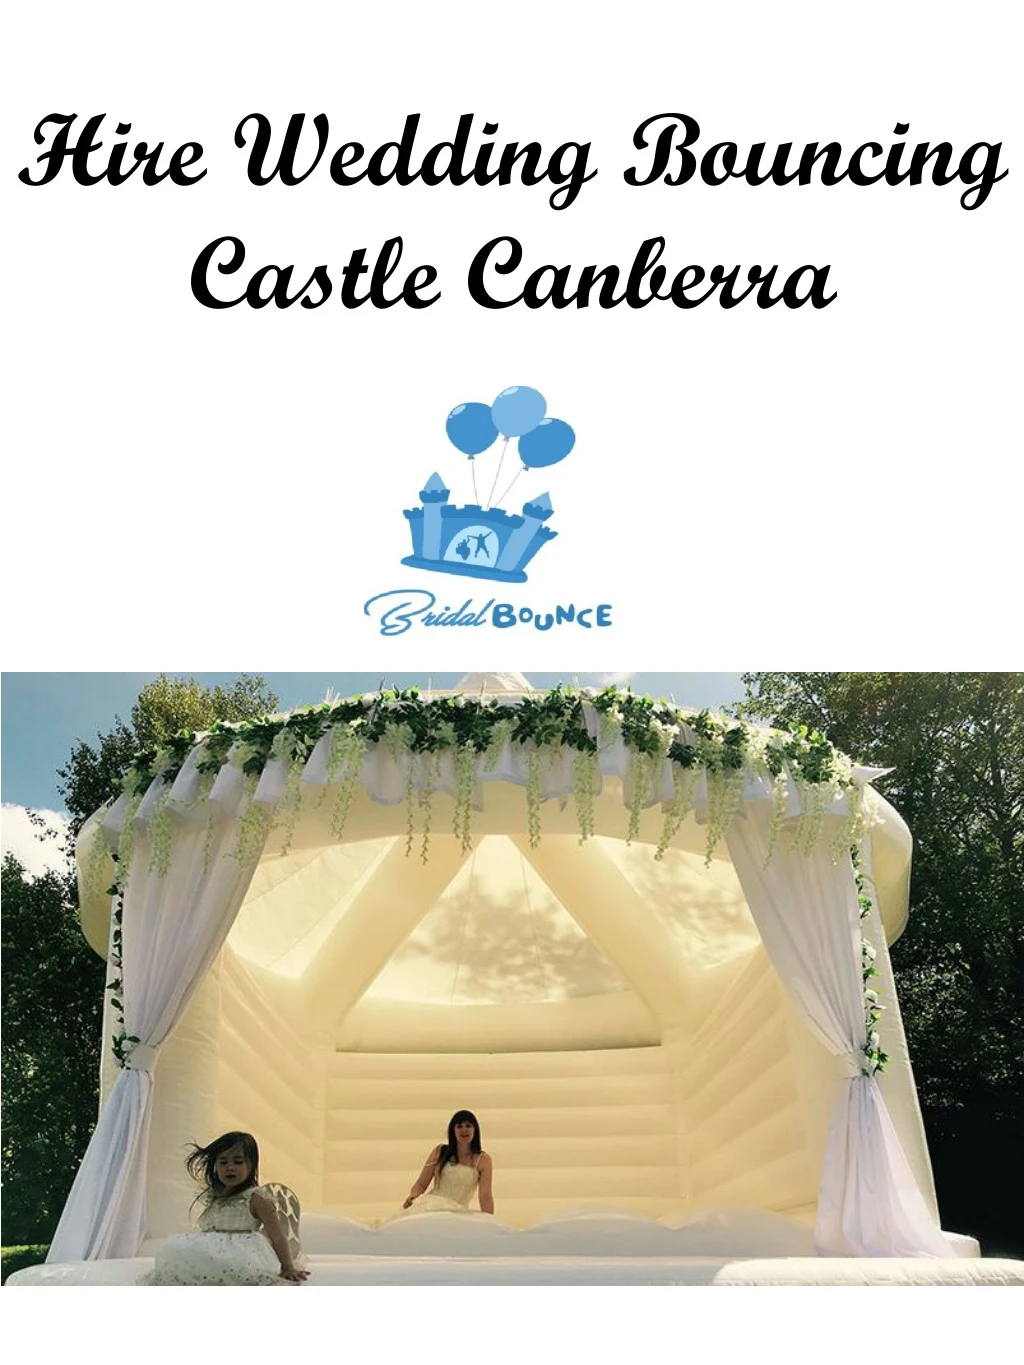 hire wedding bouncing castle canberra